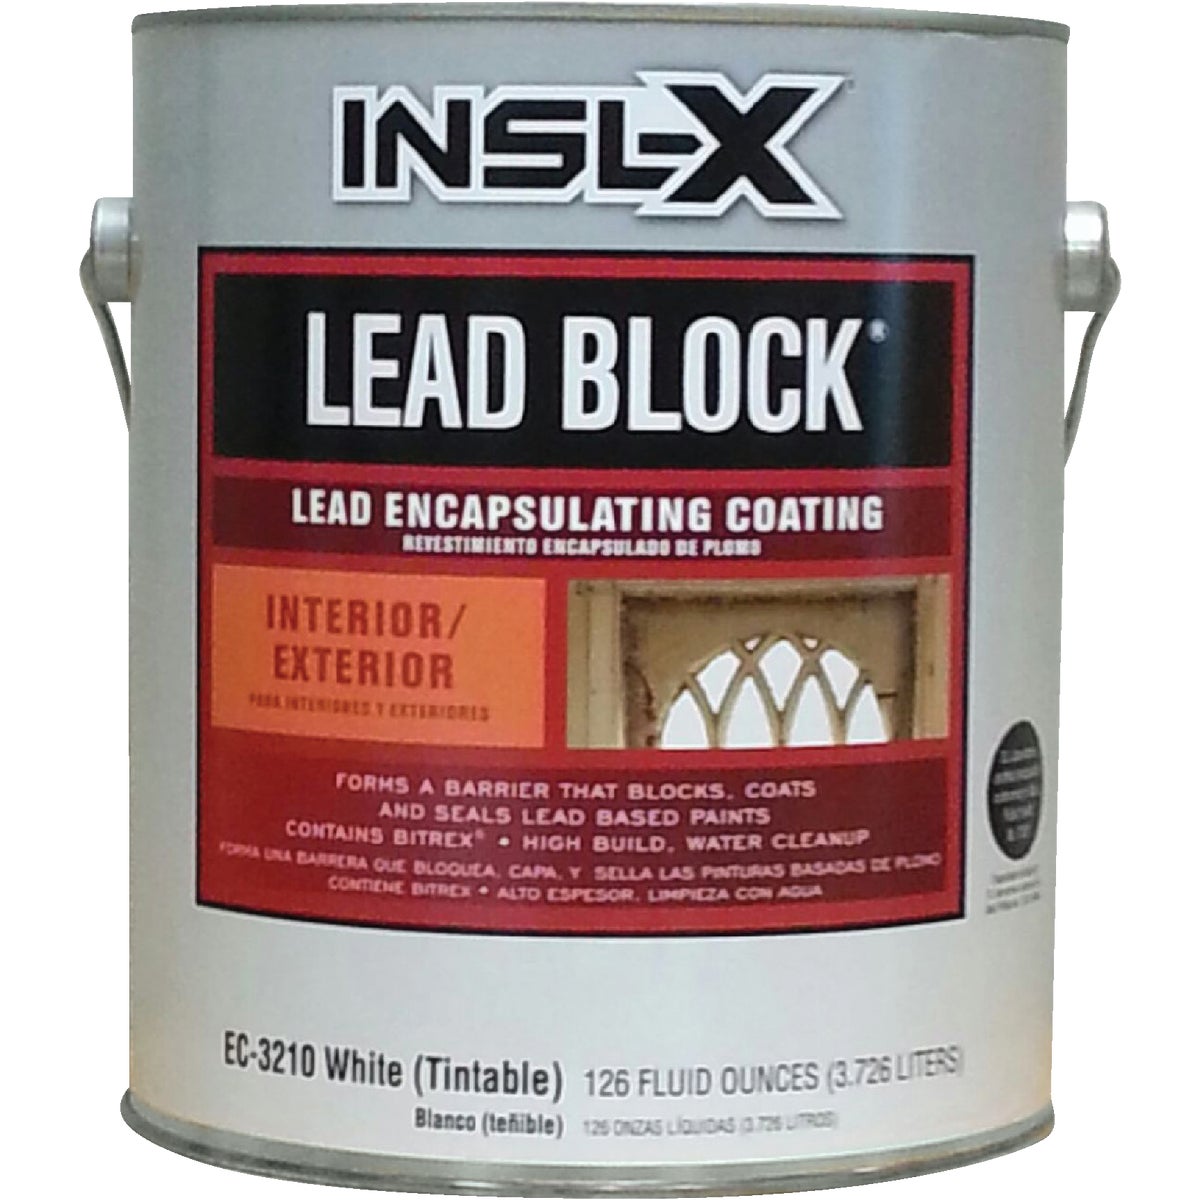 INSL-X Lead Block Water Base Lead Encapsulant Coating, 1 Gal.